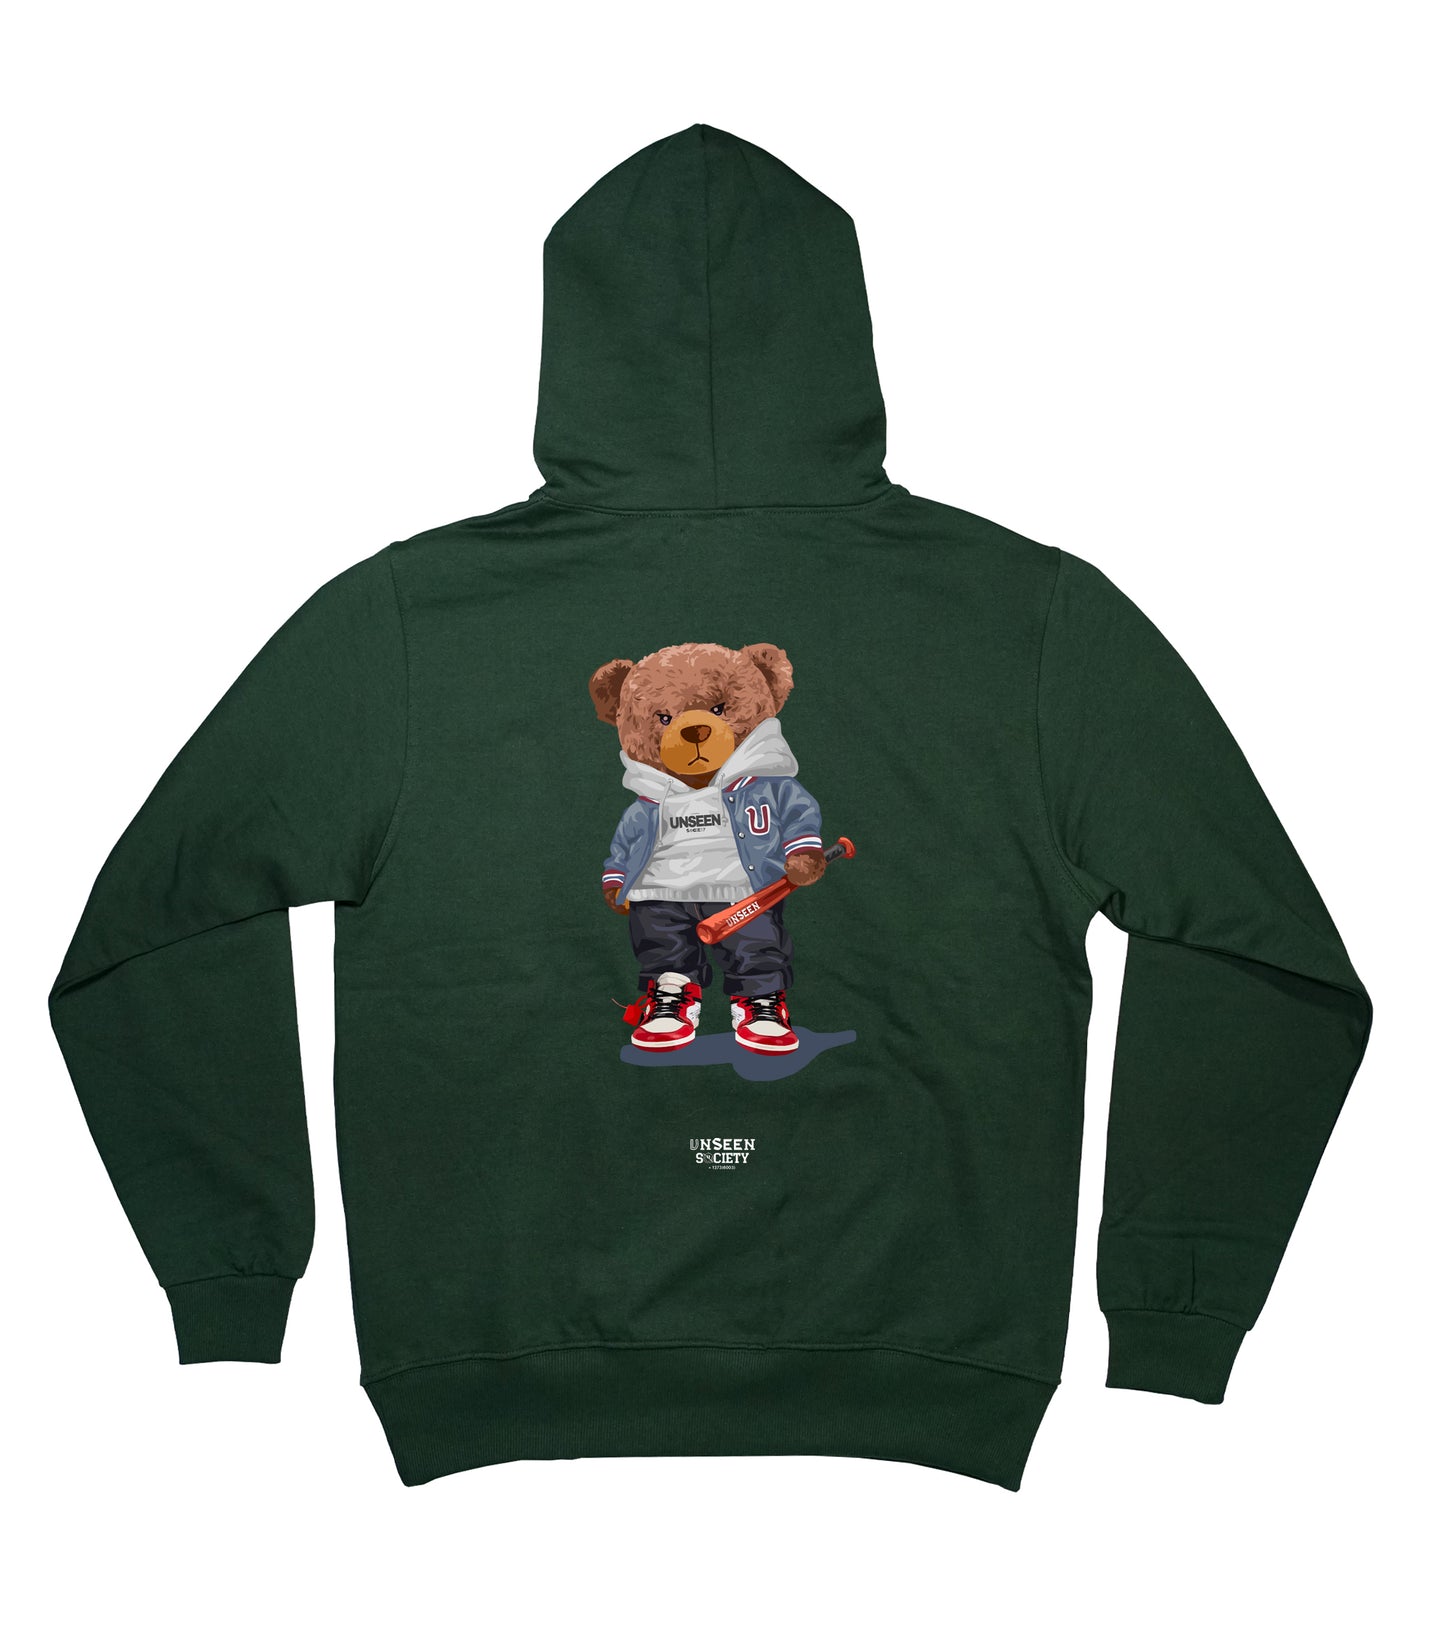 Bear with bat hoodie